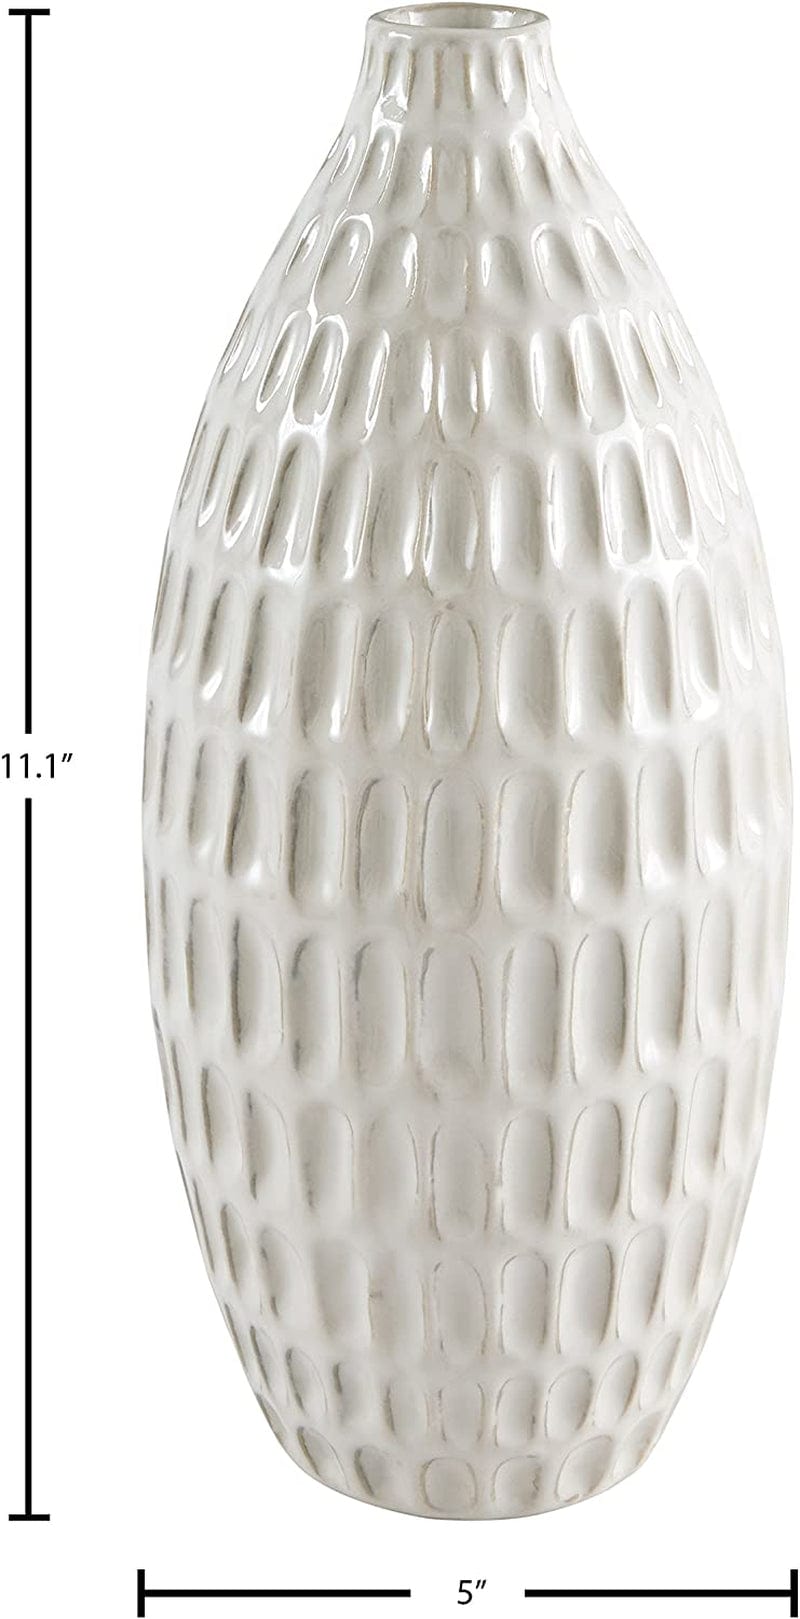 Brand – Stone & Beam Modern Oval Pattern Decorative Stoneware Vase, 11.1 Inch Height, Off-White